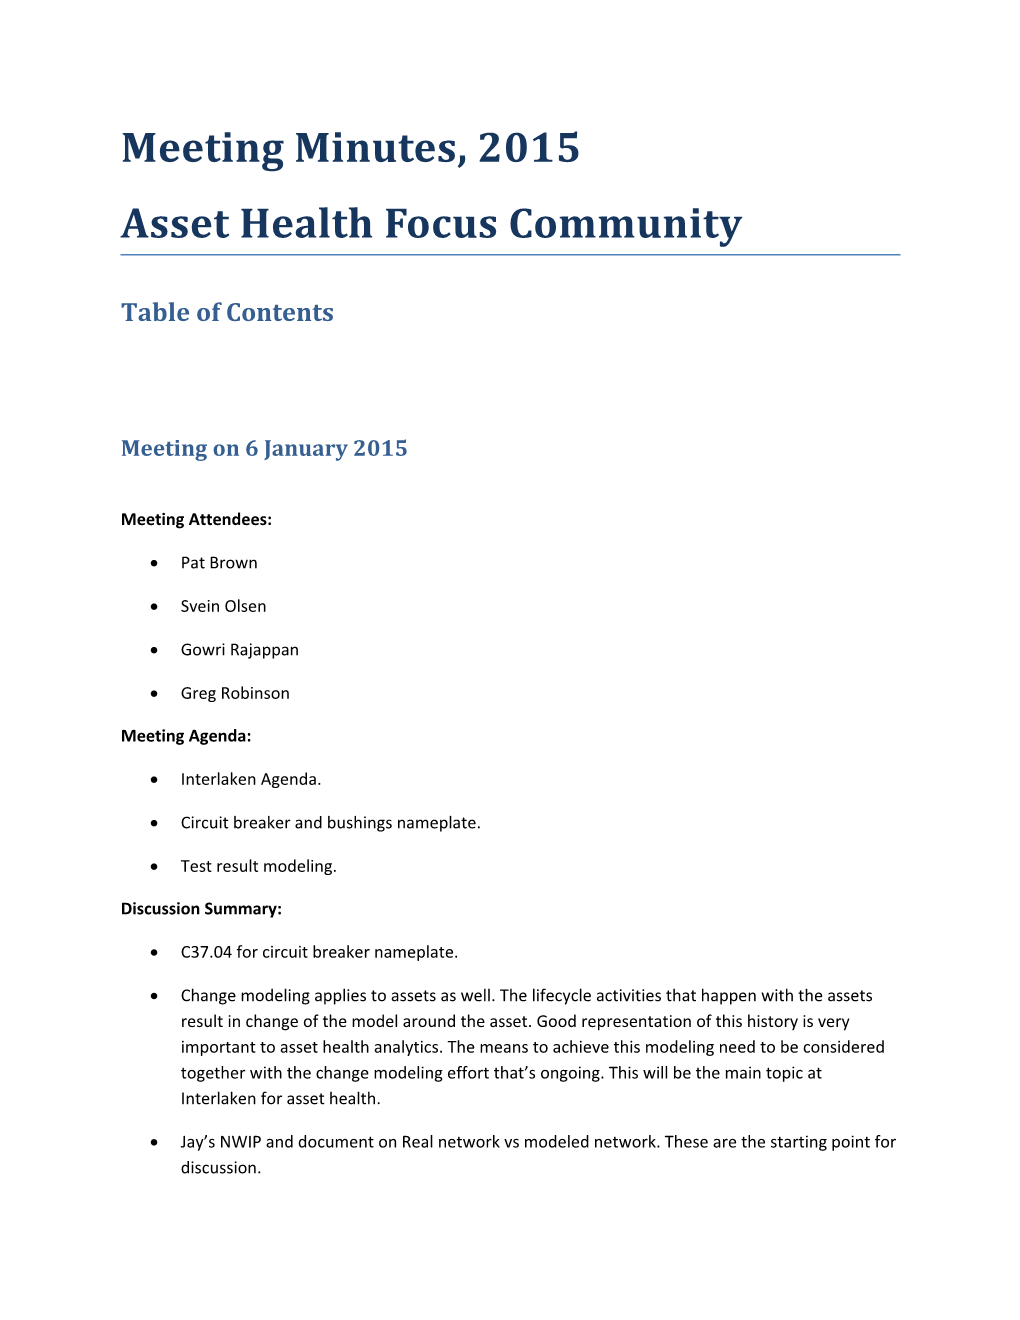 Asset Health Focus Community